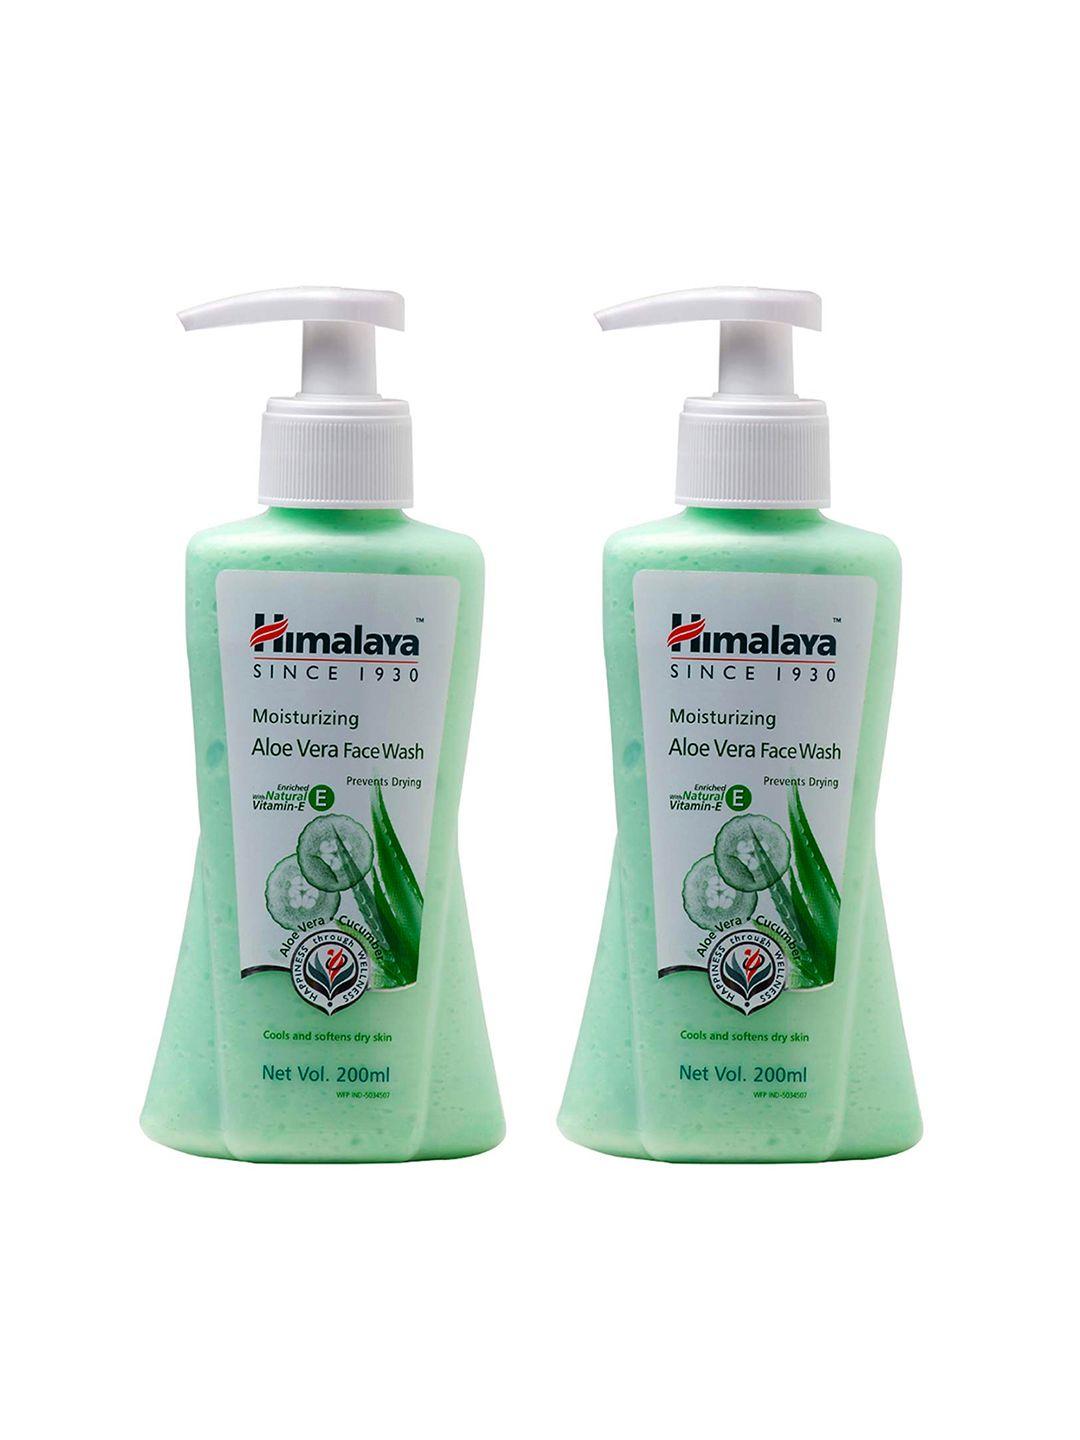 himalaya set of 2 moisturizing aloe vera face wash with natural vitamin e - 200ml each